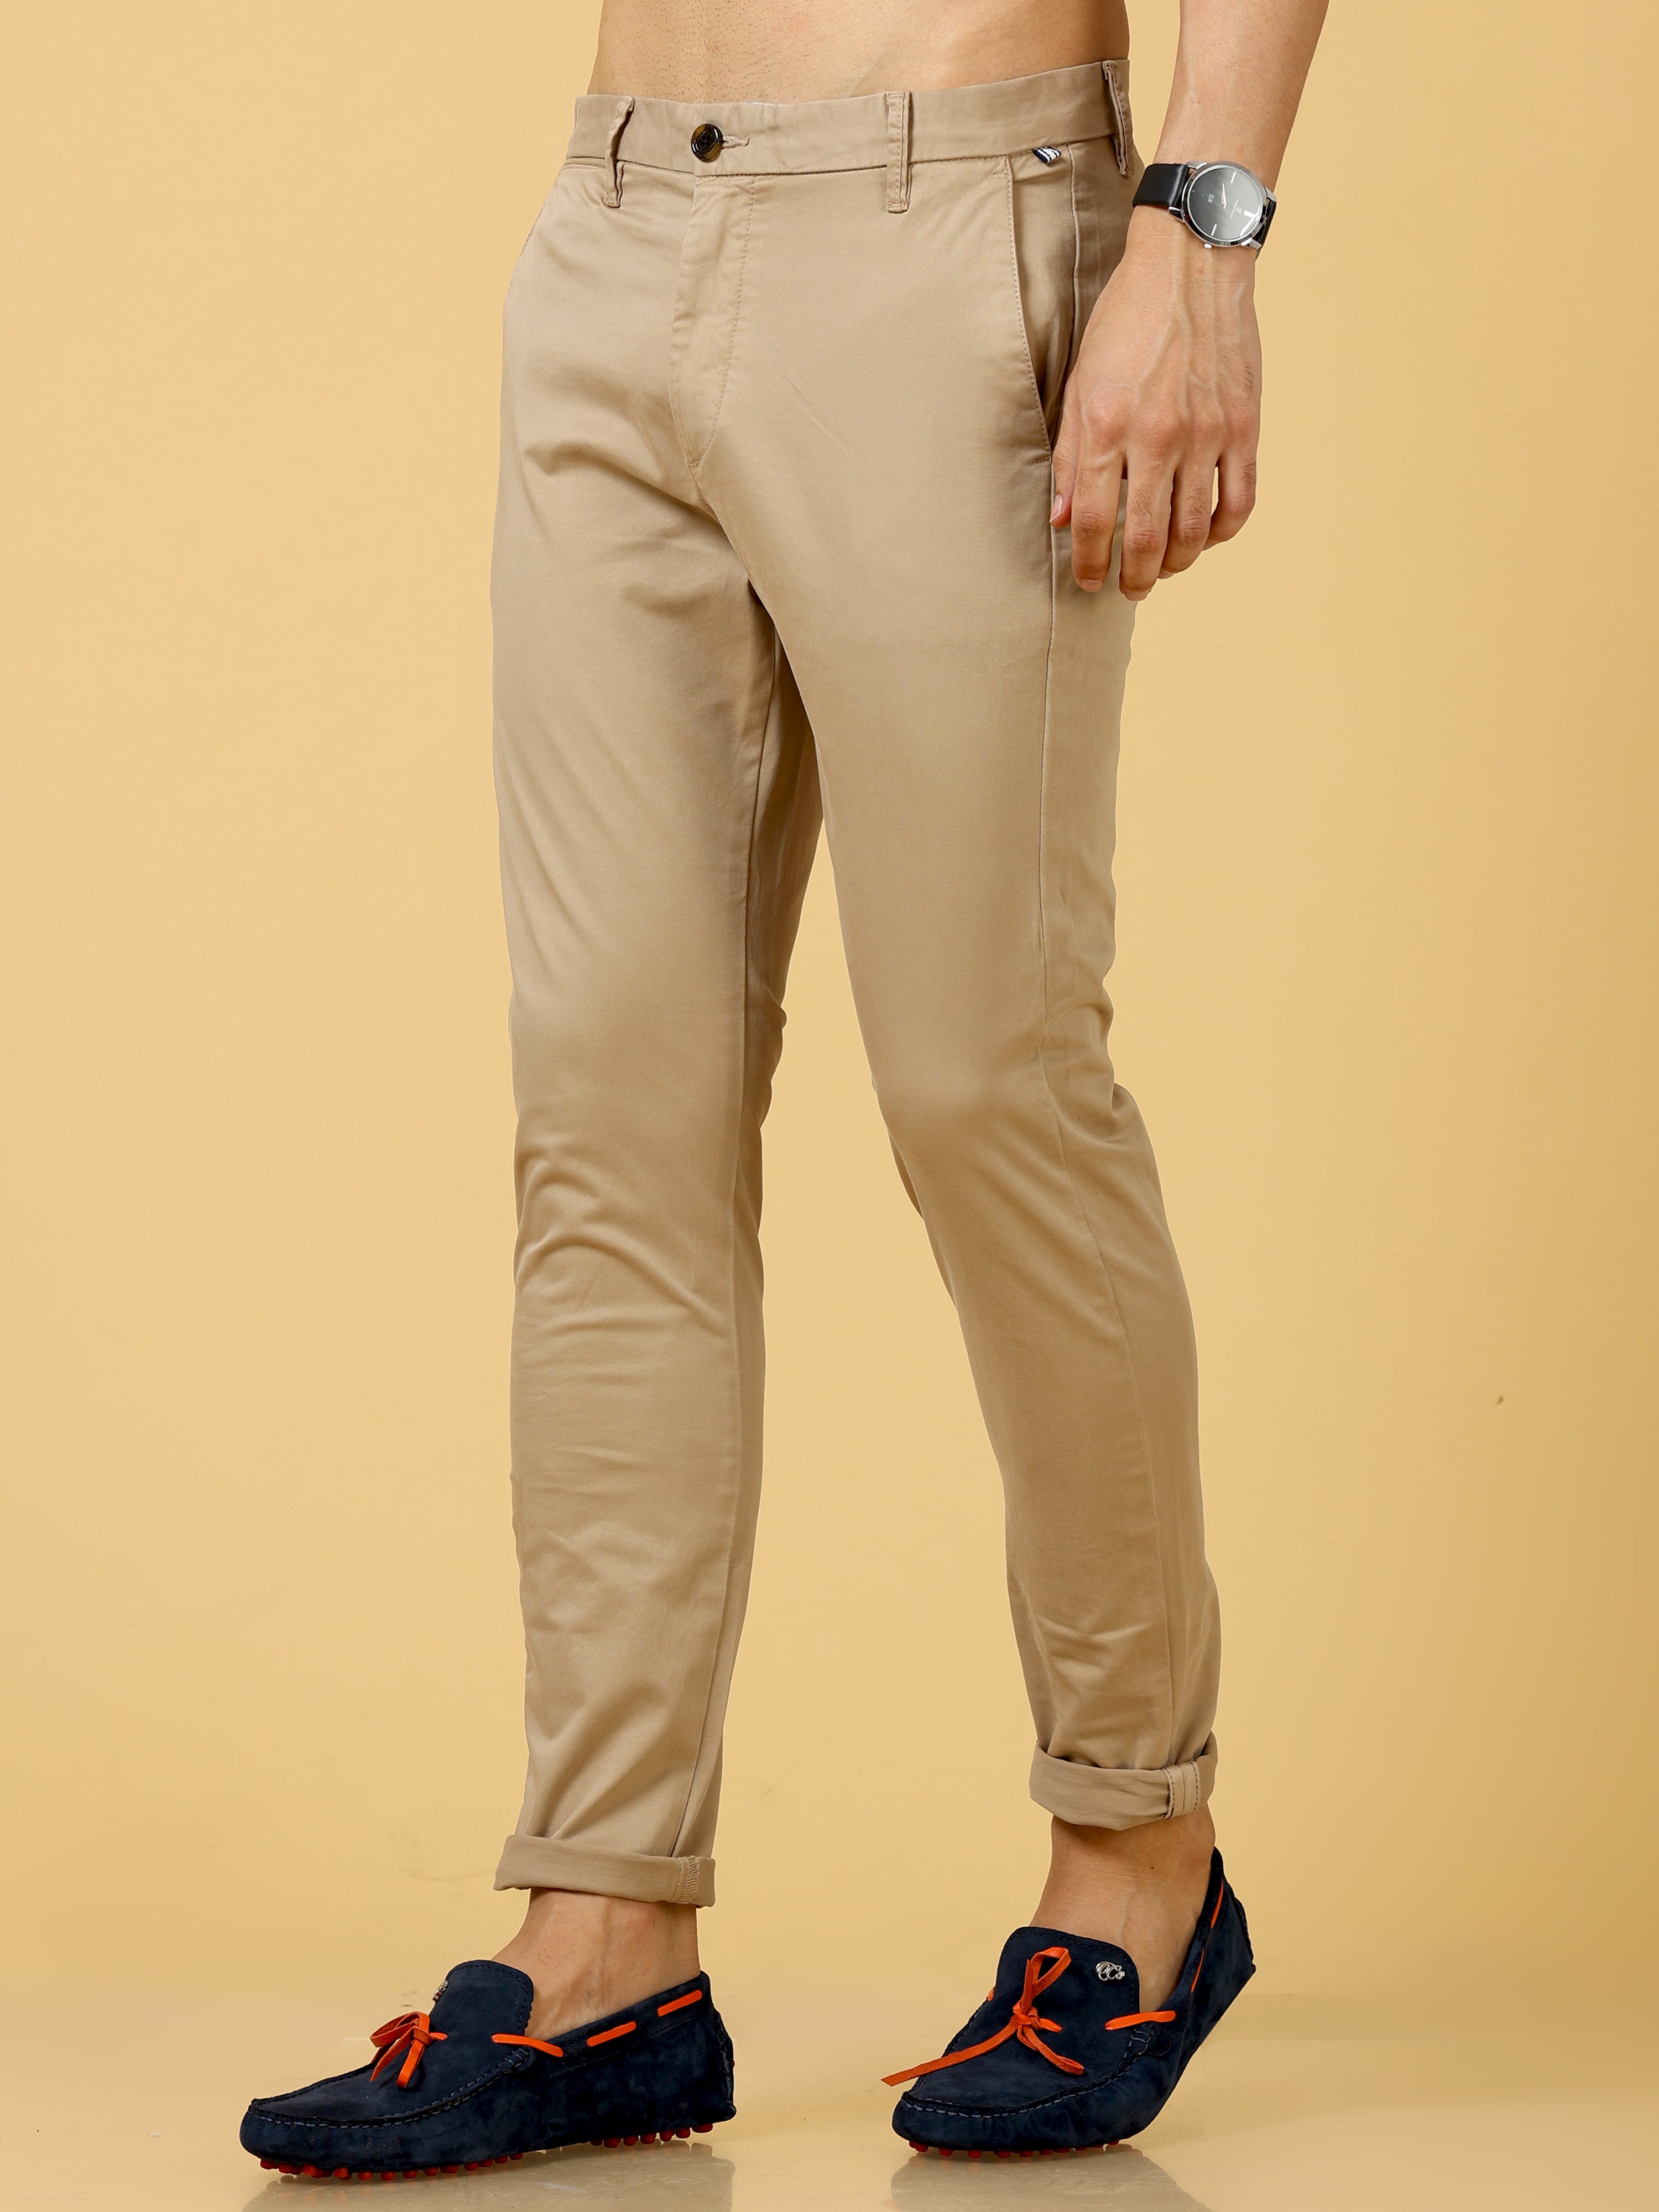 Patchwork UNISEX Cotton Trousers VINTAGE Yoga Pant handmade NEPAL Gheri  stripe | eBay